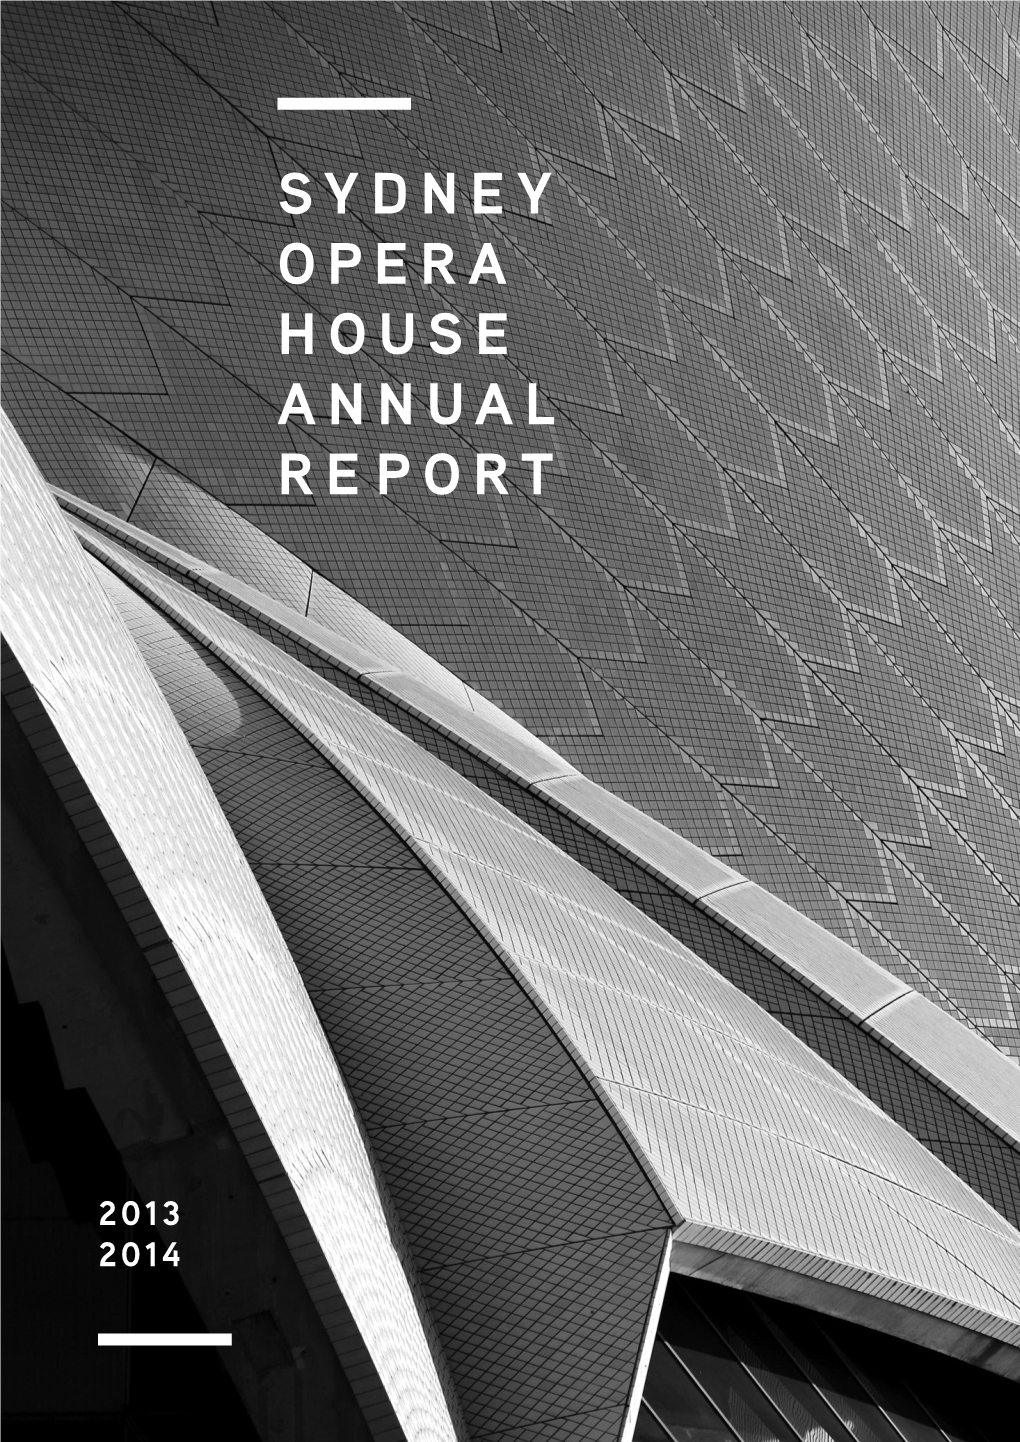 Sydney Opera House Annual Report 2014-2015